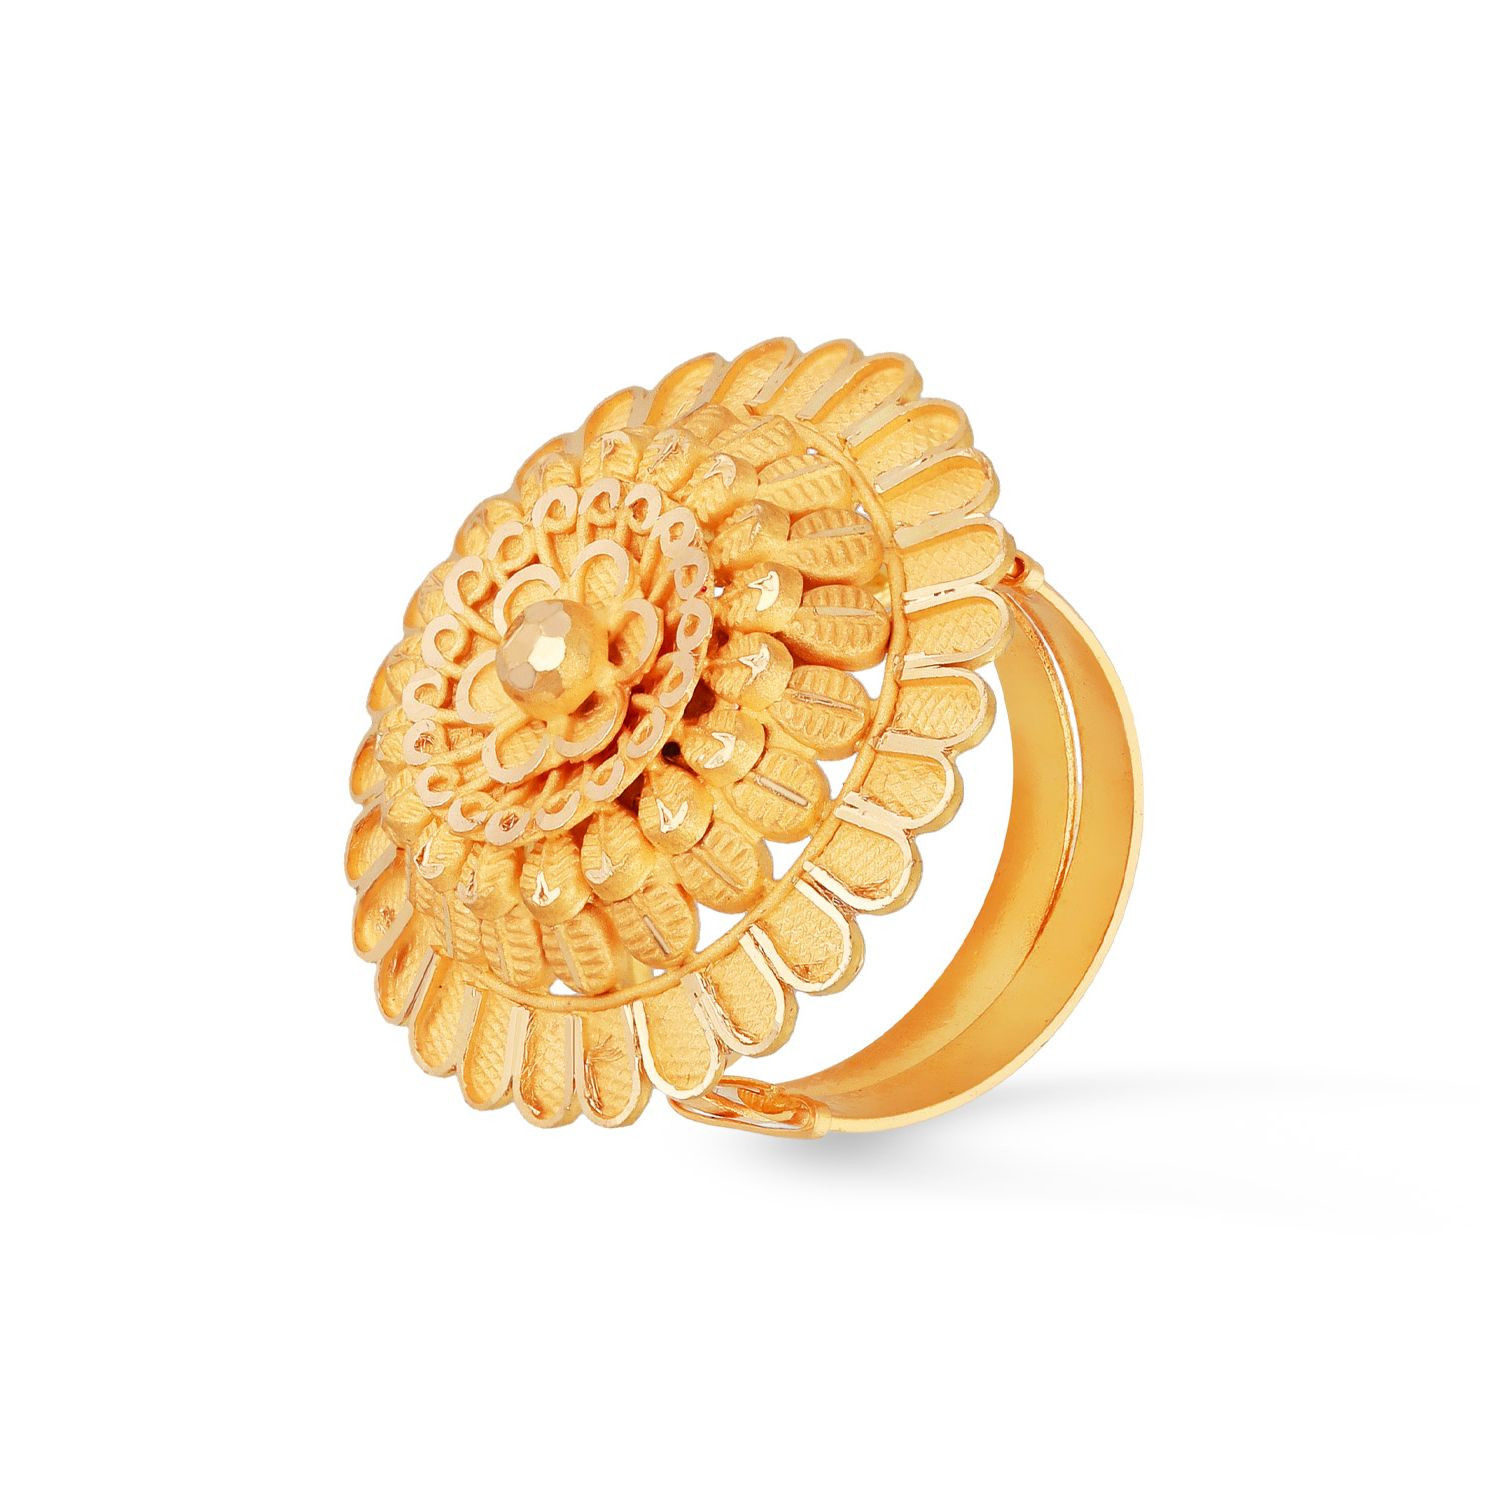 Khushi Imitation Golden Ladies Gold Plated Finger Ring, Size: 7-17,  Packaging Type: Packet at Rs 42/dozen in Rajkot